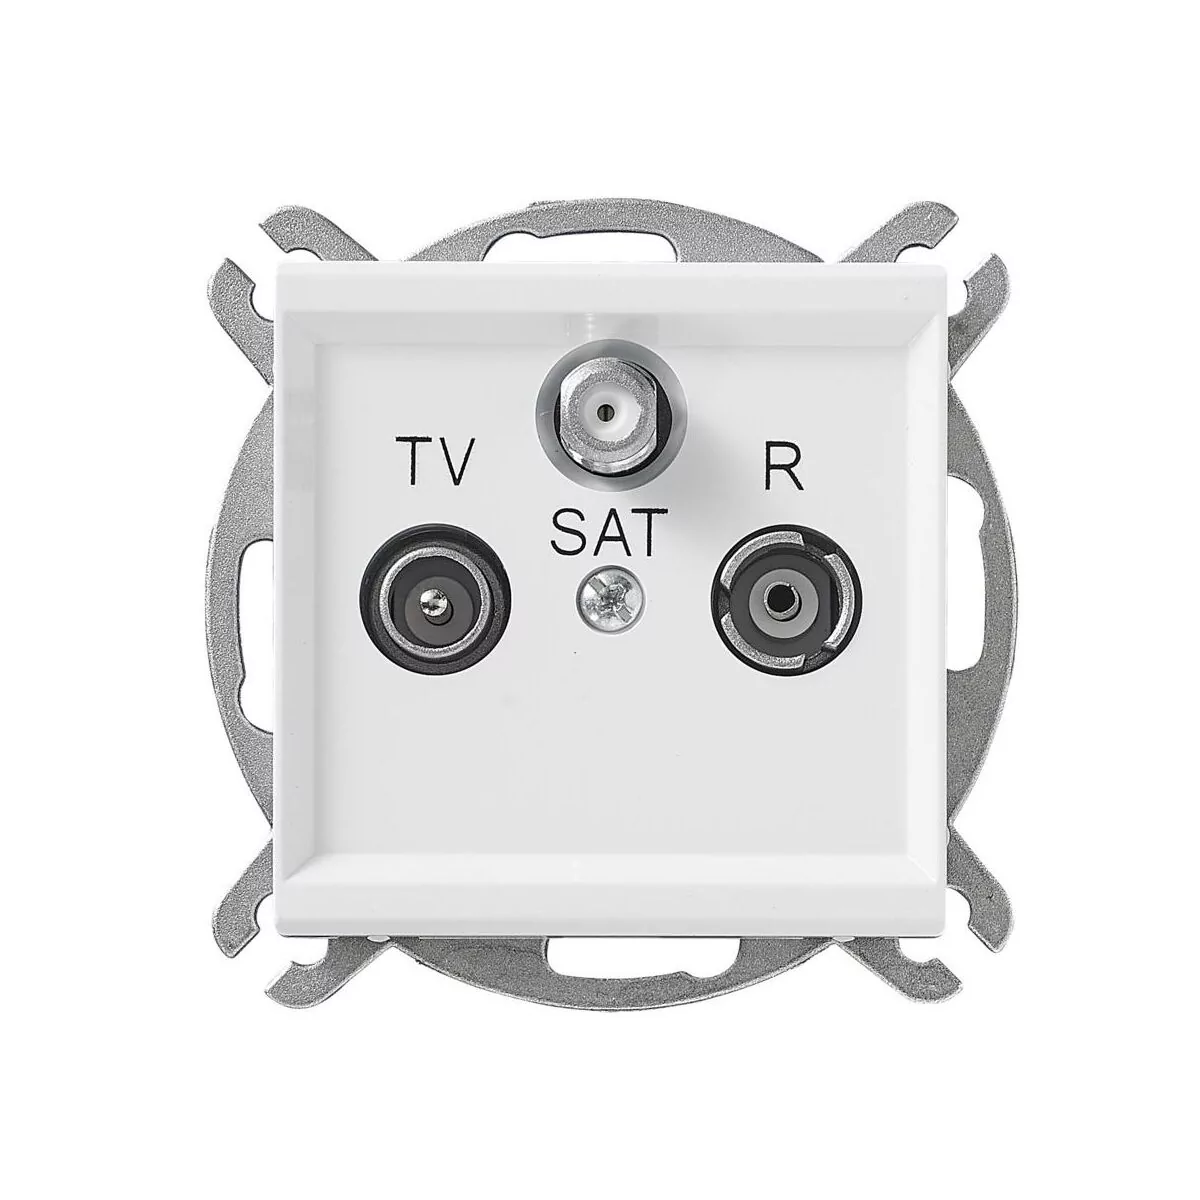 LEDart antenowe RTV/SAT końcowe, bez ramki - Ospel Sonata GPA-RS/m/00 , kolor biały